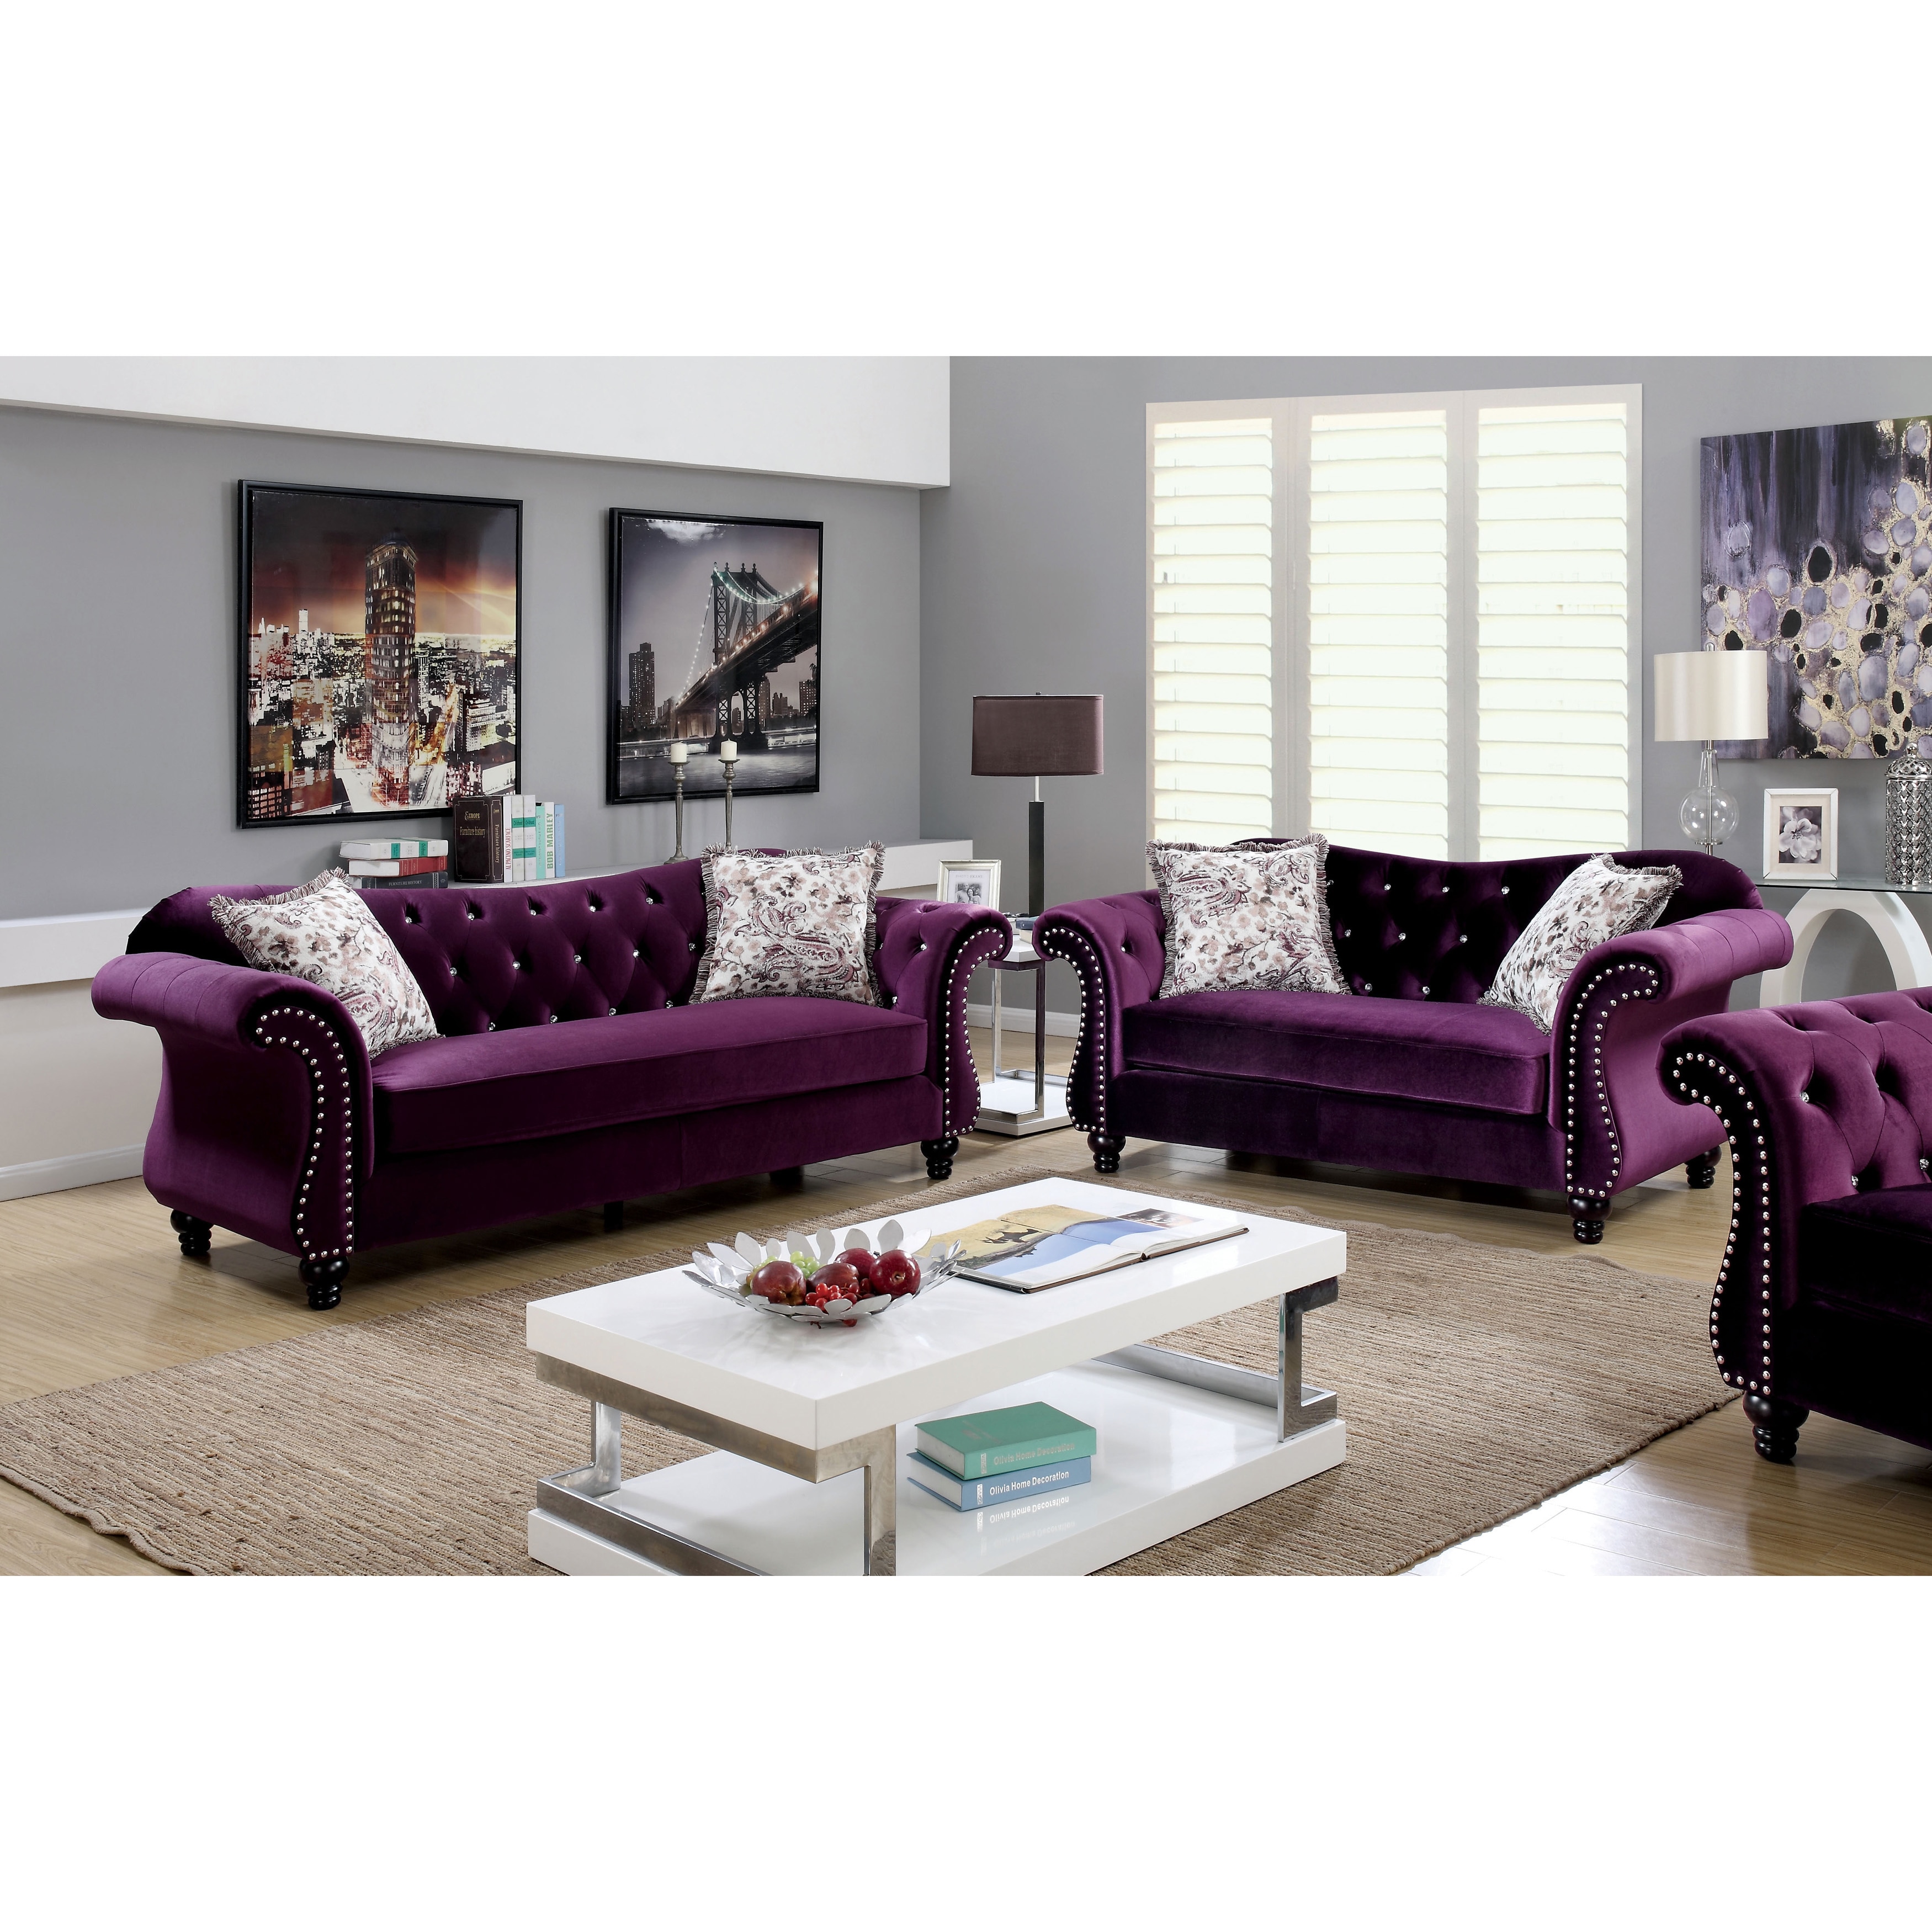 Furniture Of America Tese Traditional Fabric 2 Piece Sofa Set Overstock 11502124